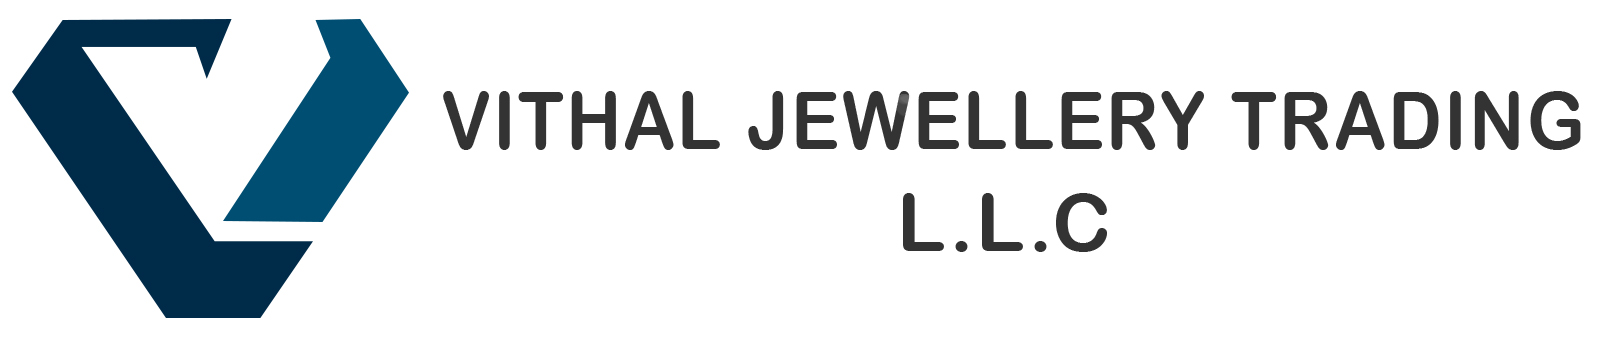 Vithal Jewellery Trading L.L.C